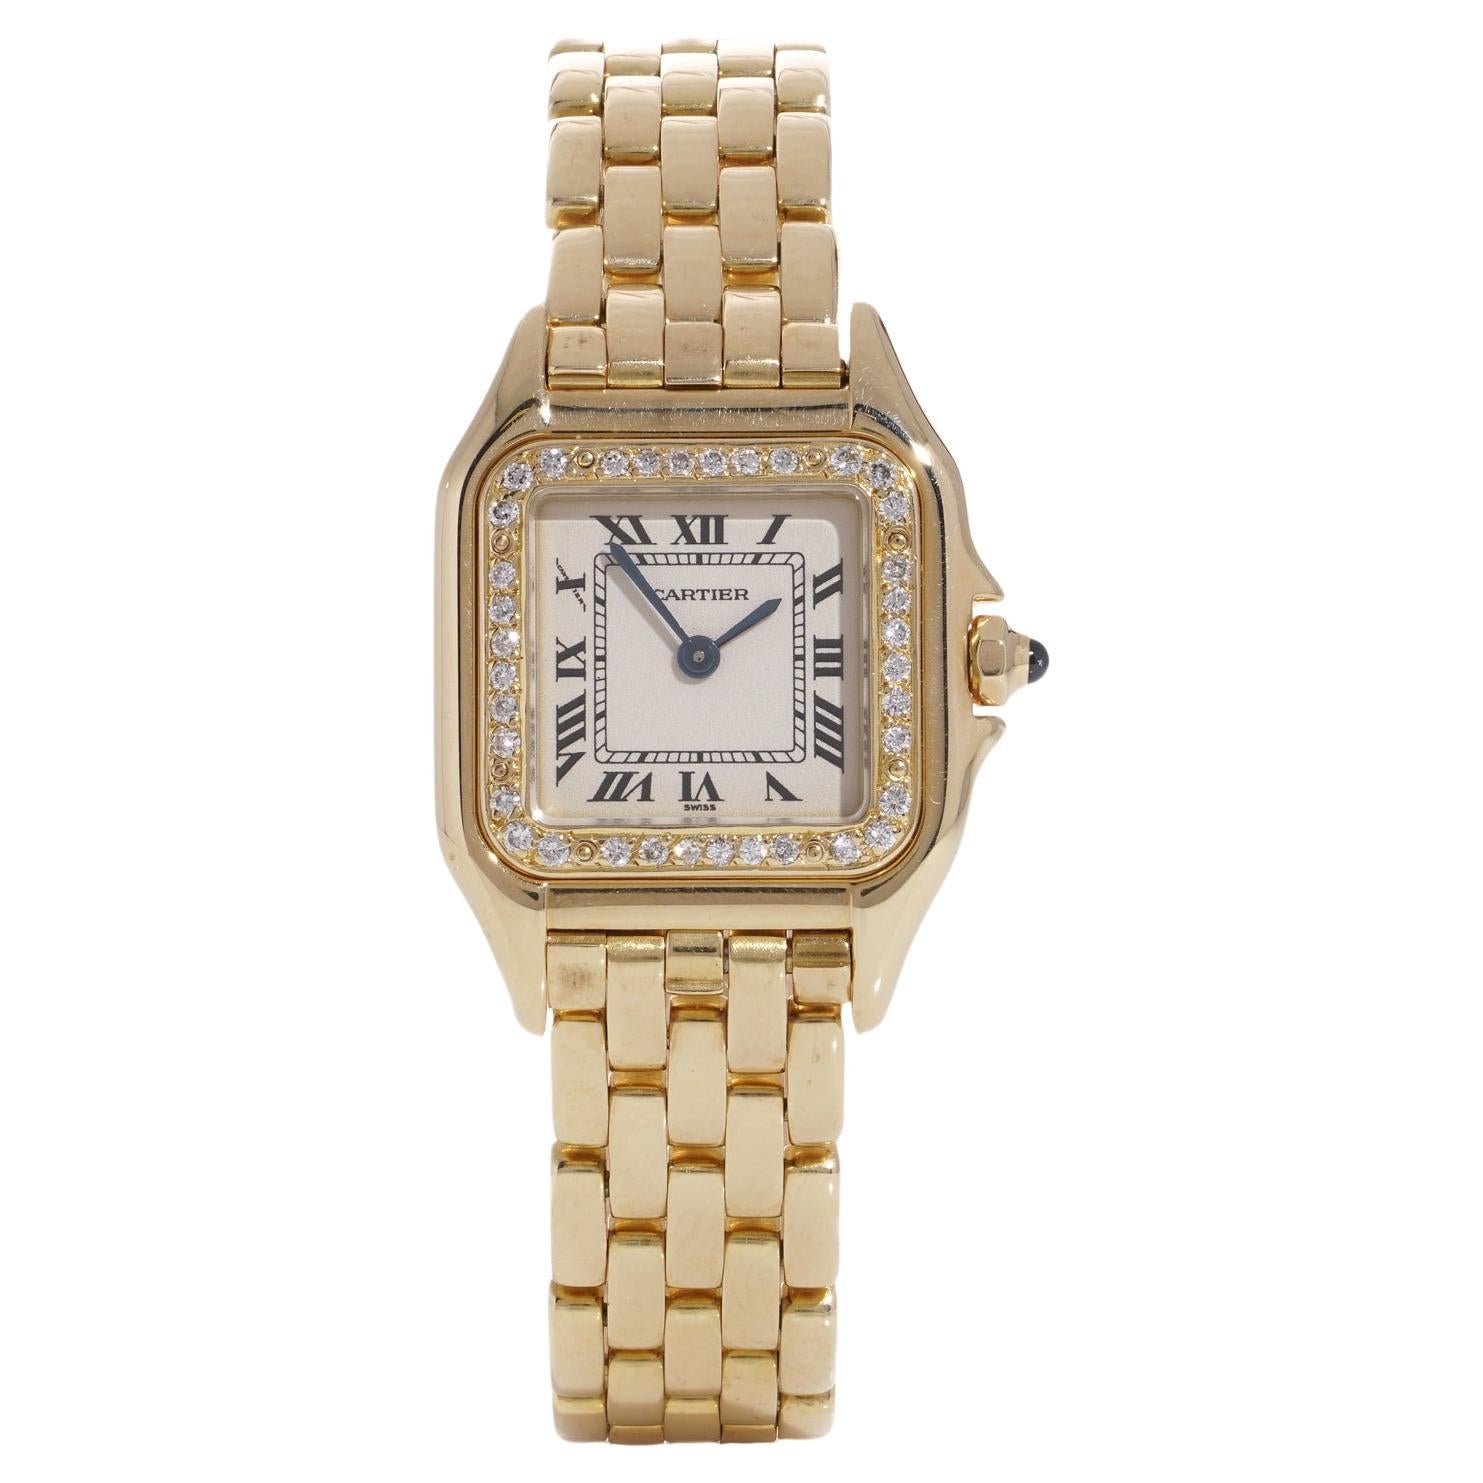 Cartier Panthere 18kt. yellow gold  Ladies Quartz wristwatch with diamond bezel